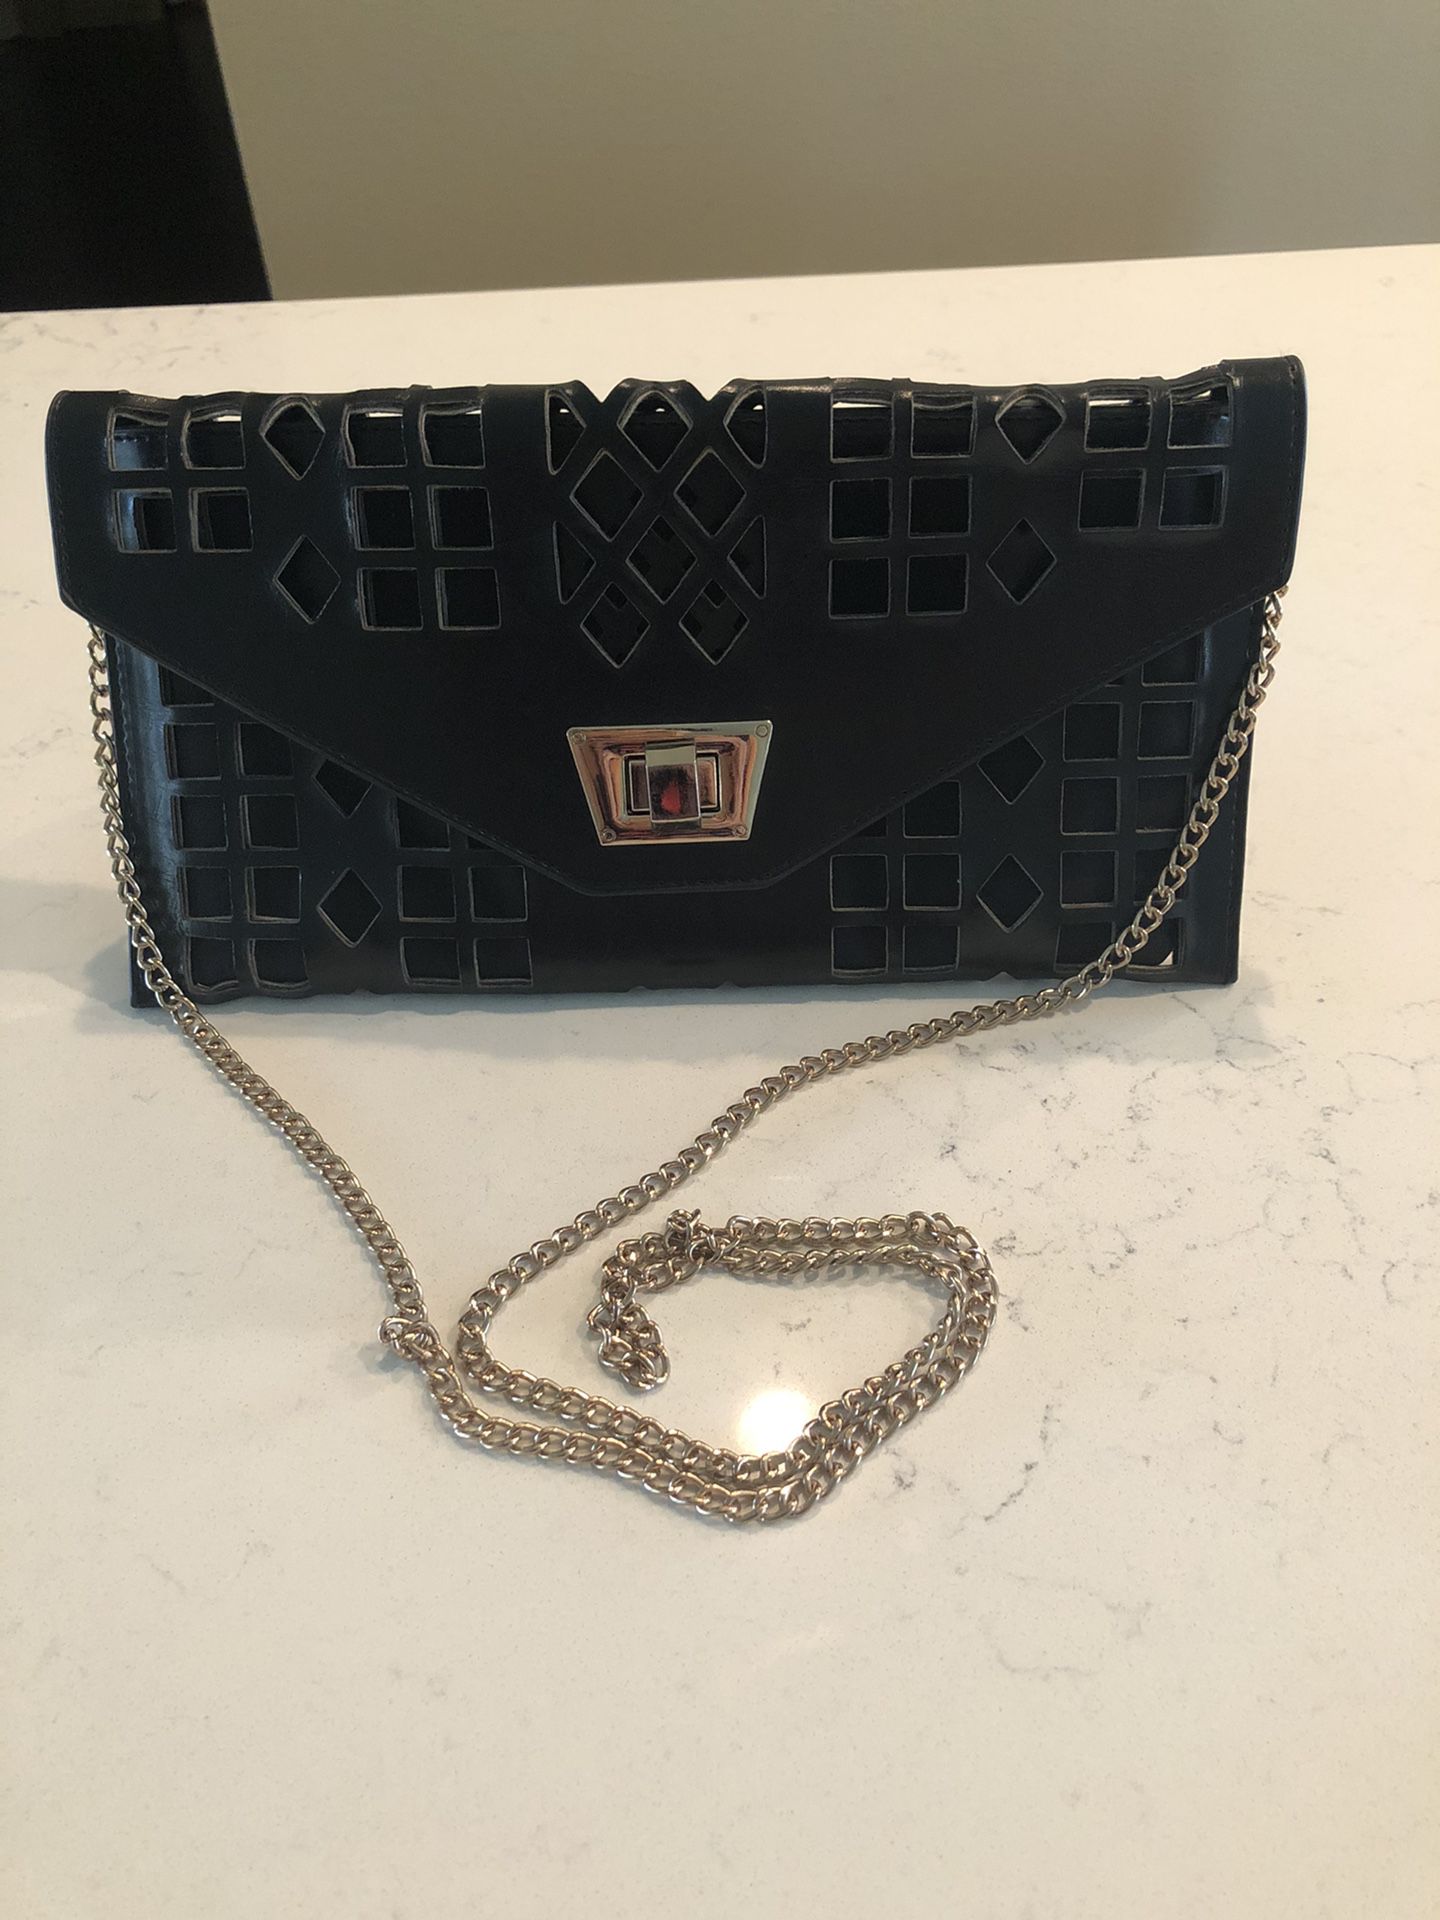 Faux leather black crossbody purse